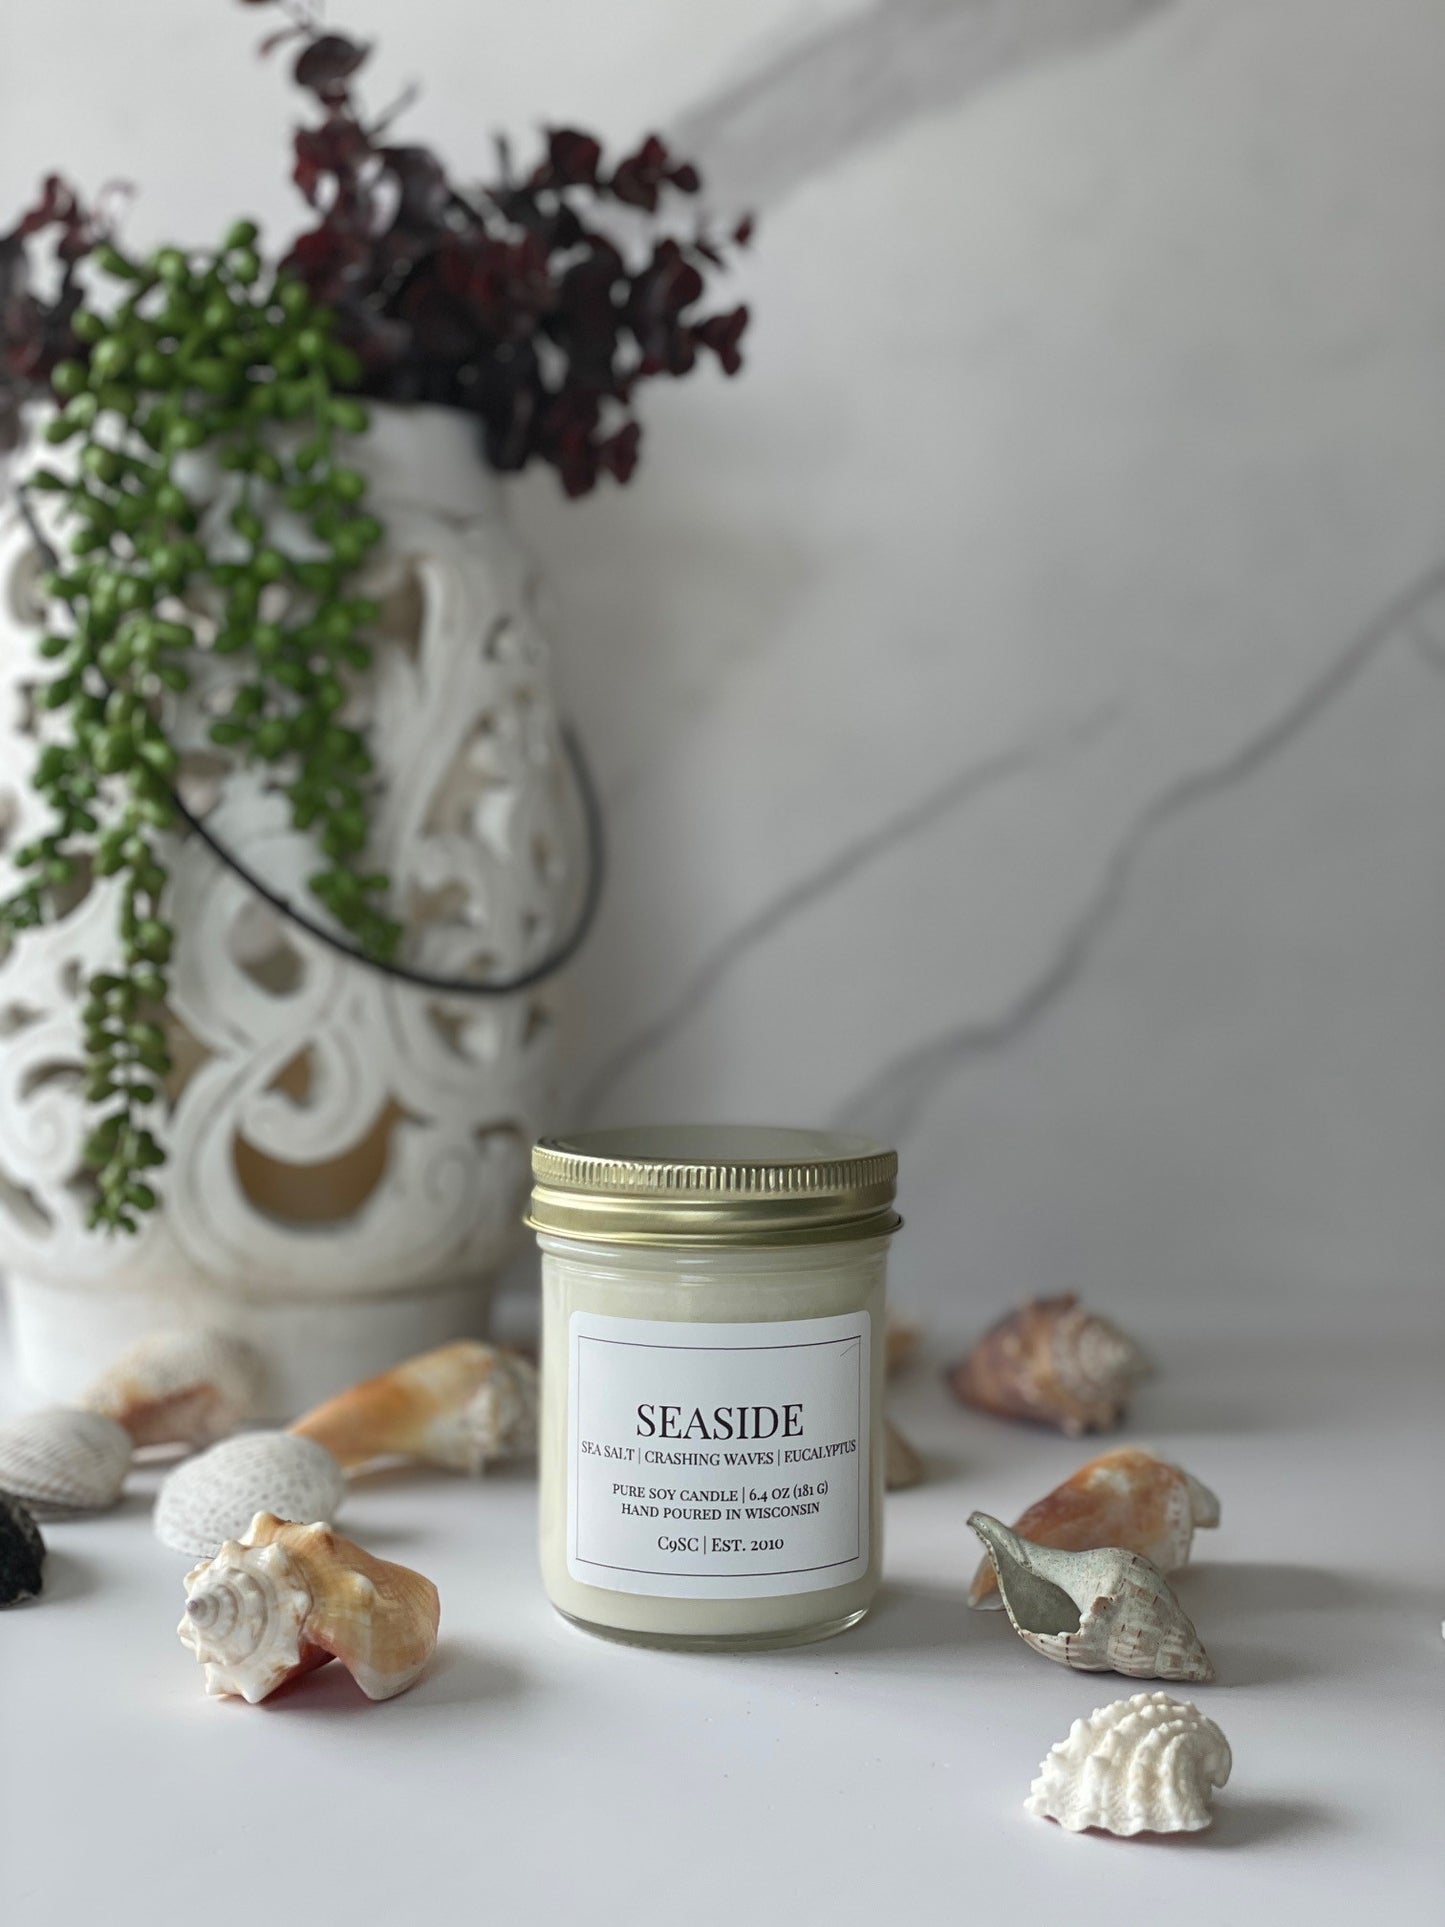 Seaside Soy Candle: Sea Salt, Crashing Waves, Eucalyptus